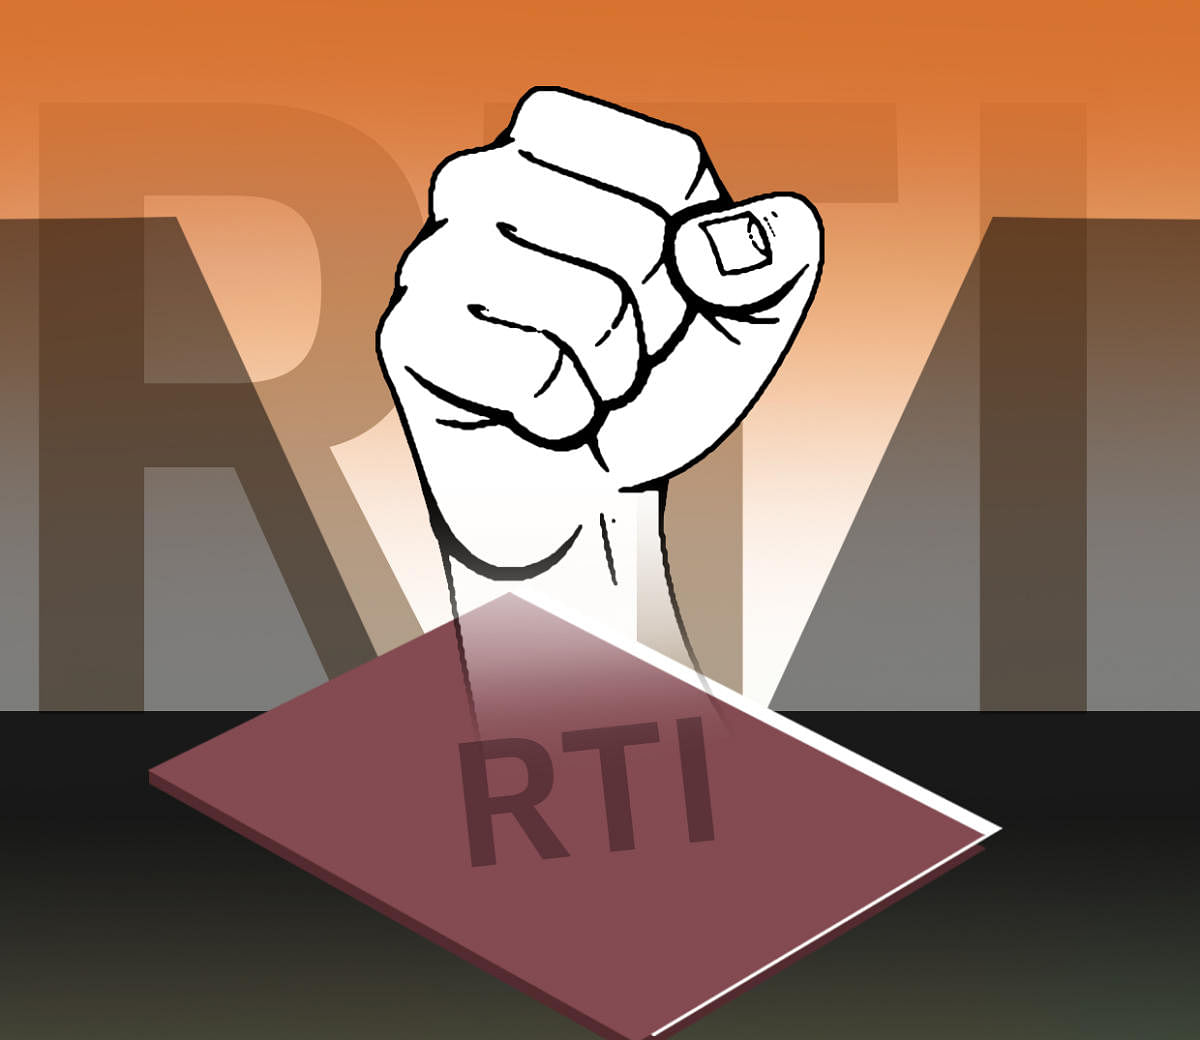 RTI: Make postings by consensus